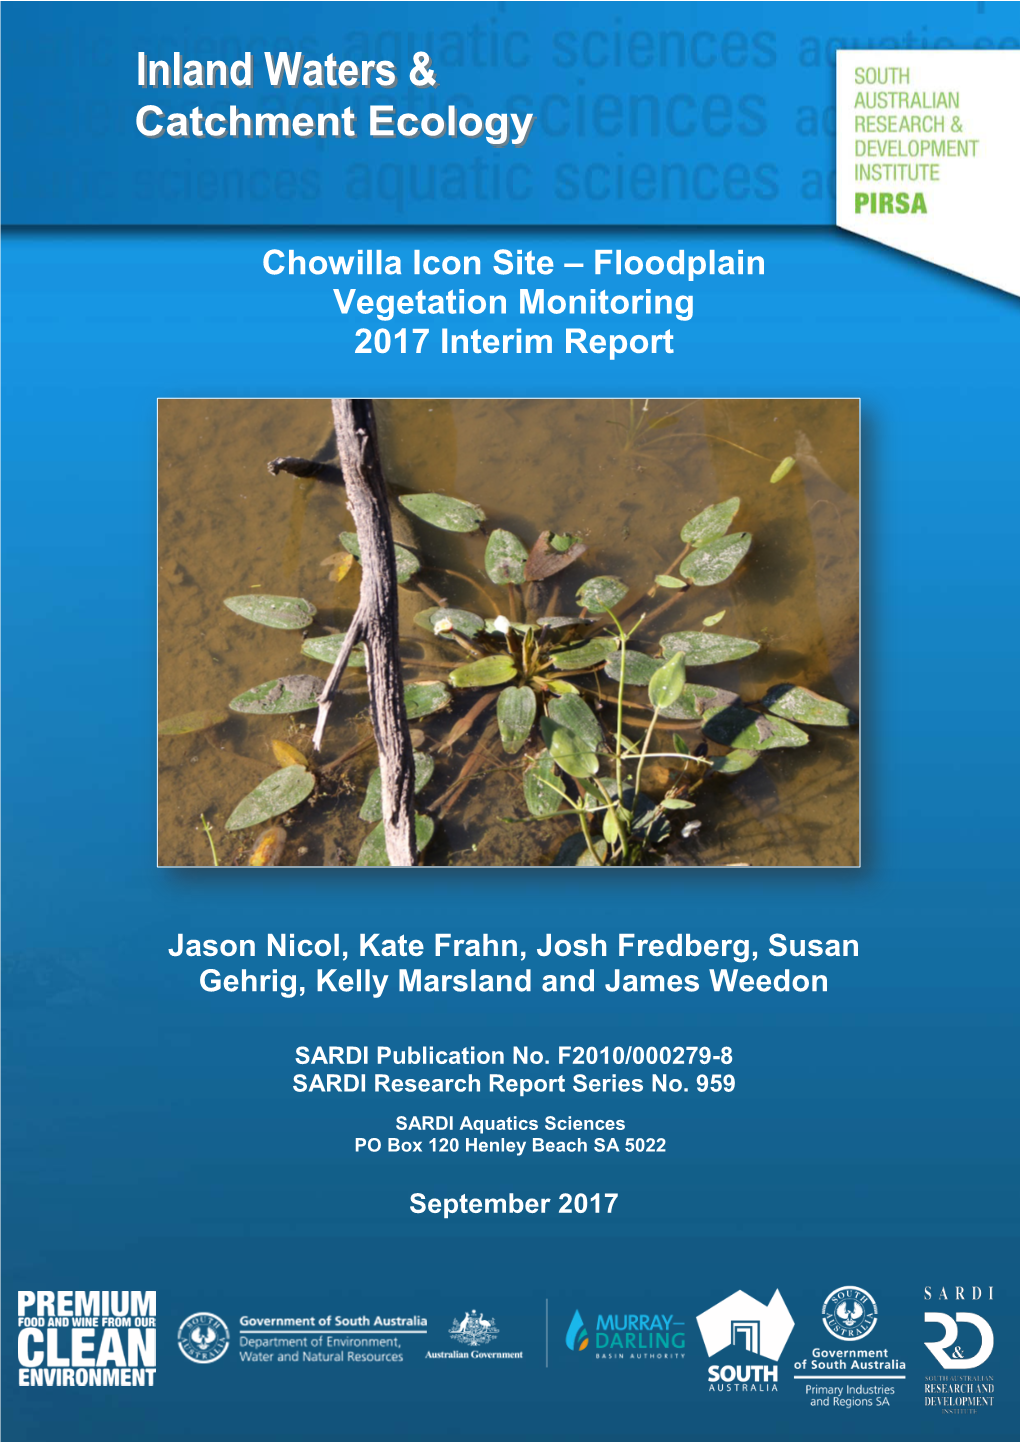 Chowilla Icon Site – Floodplain Vegetation Monitoring 2017 Interim Report